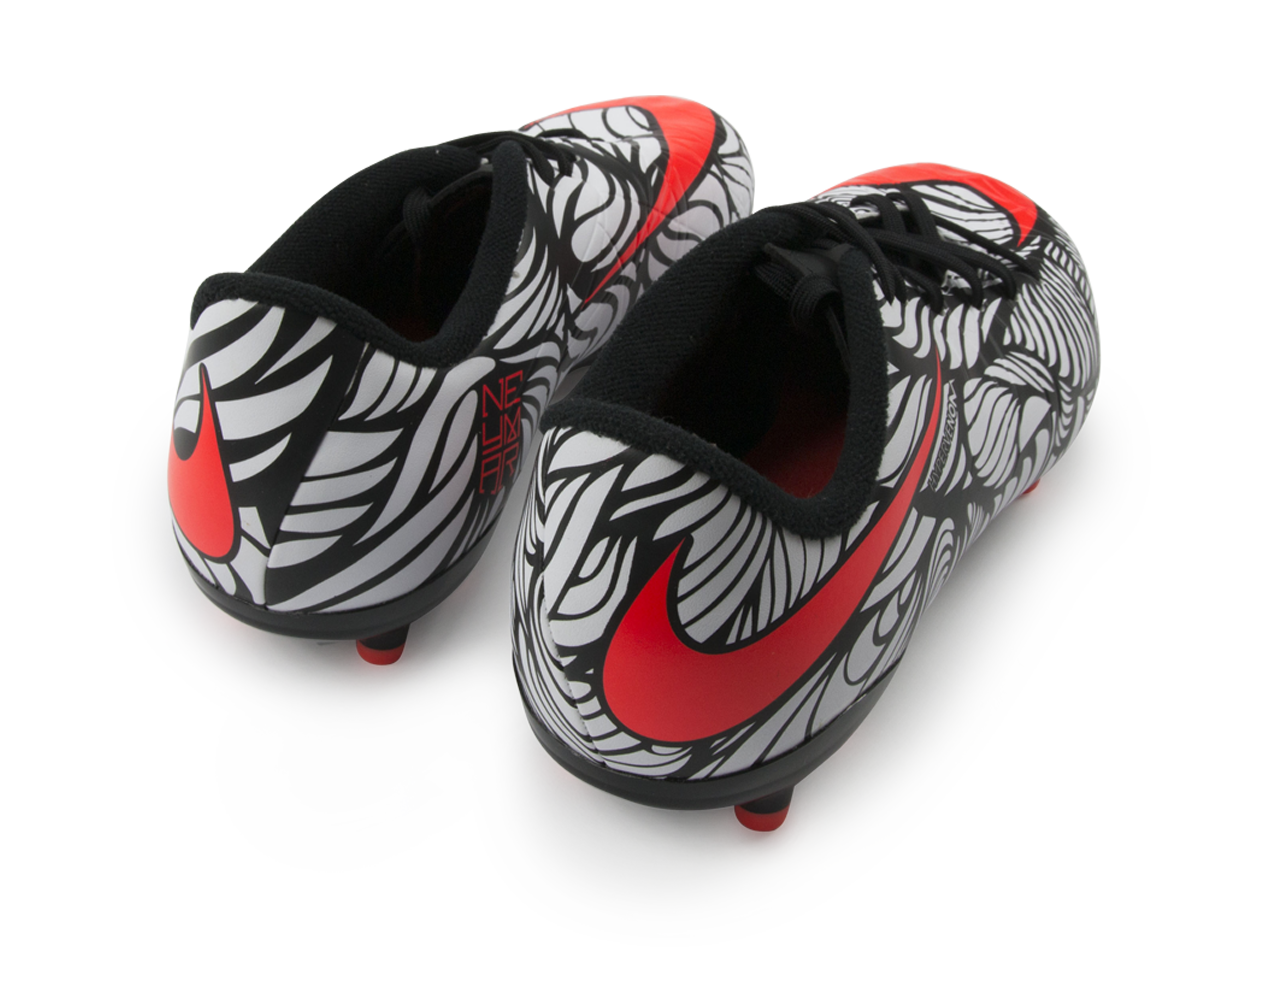 Nike Men's Hypervenom Phelon FG Black/Bright Crimson/White